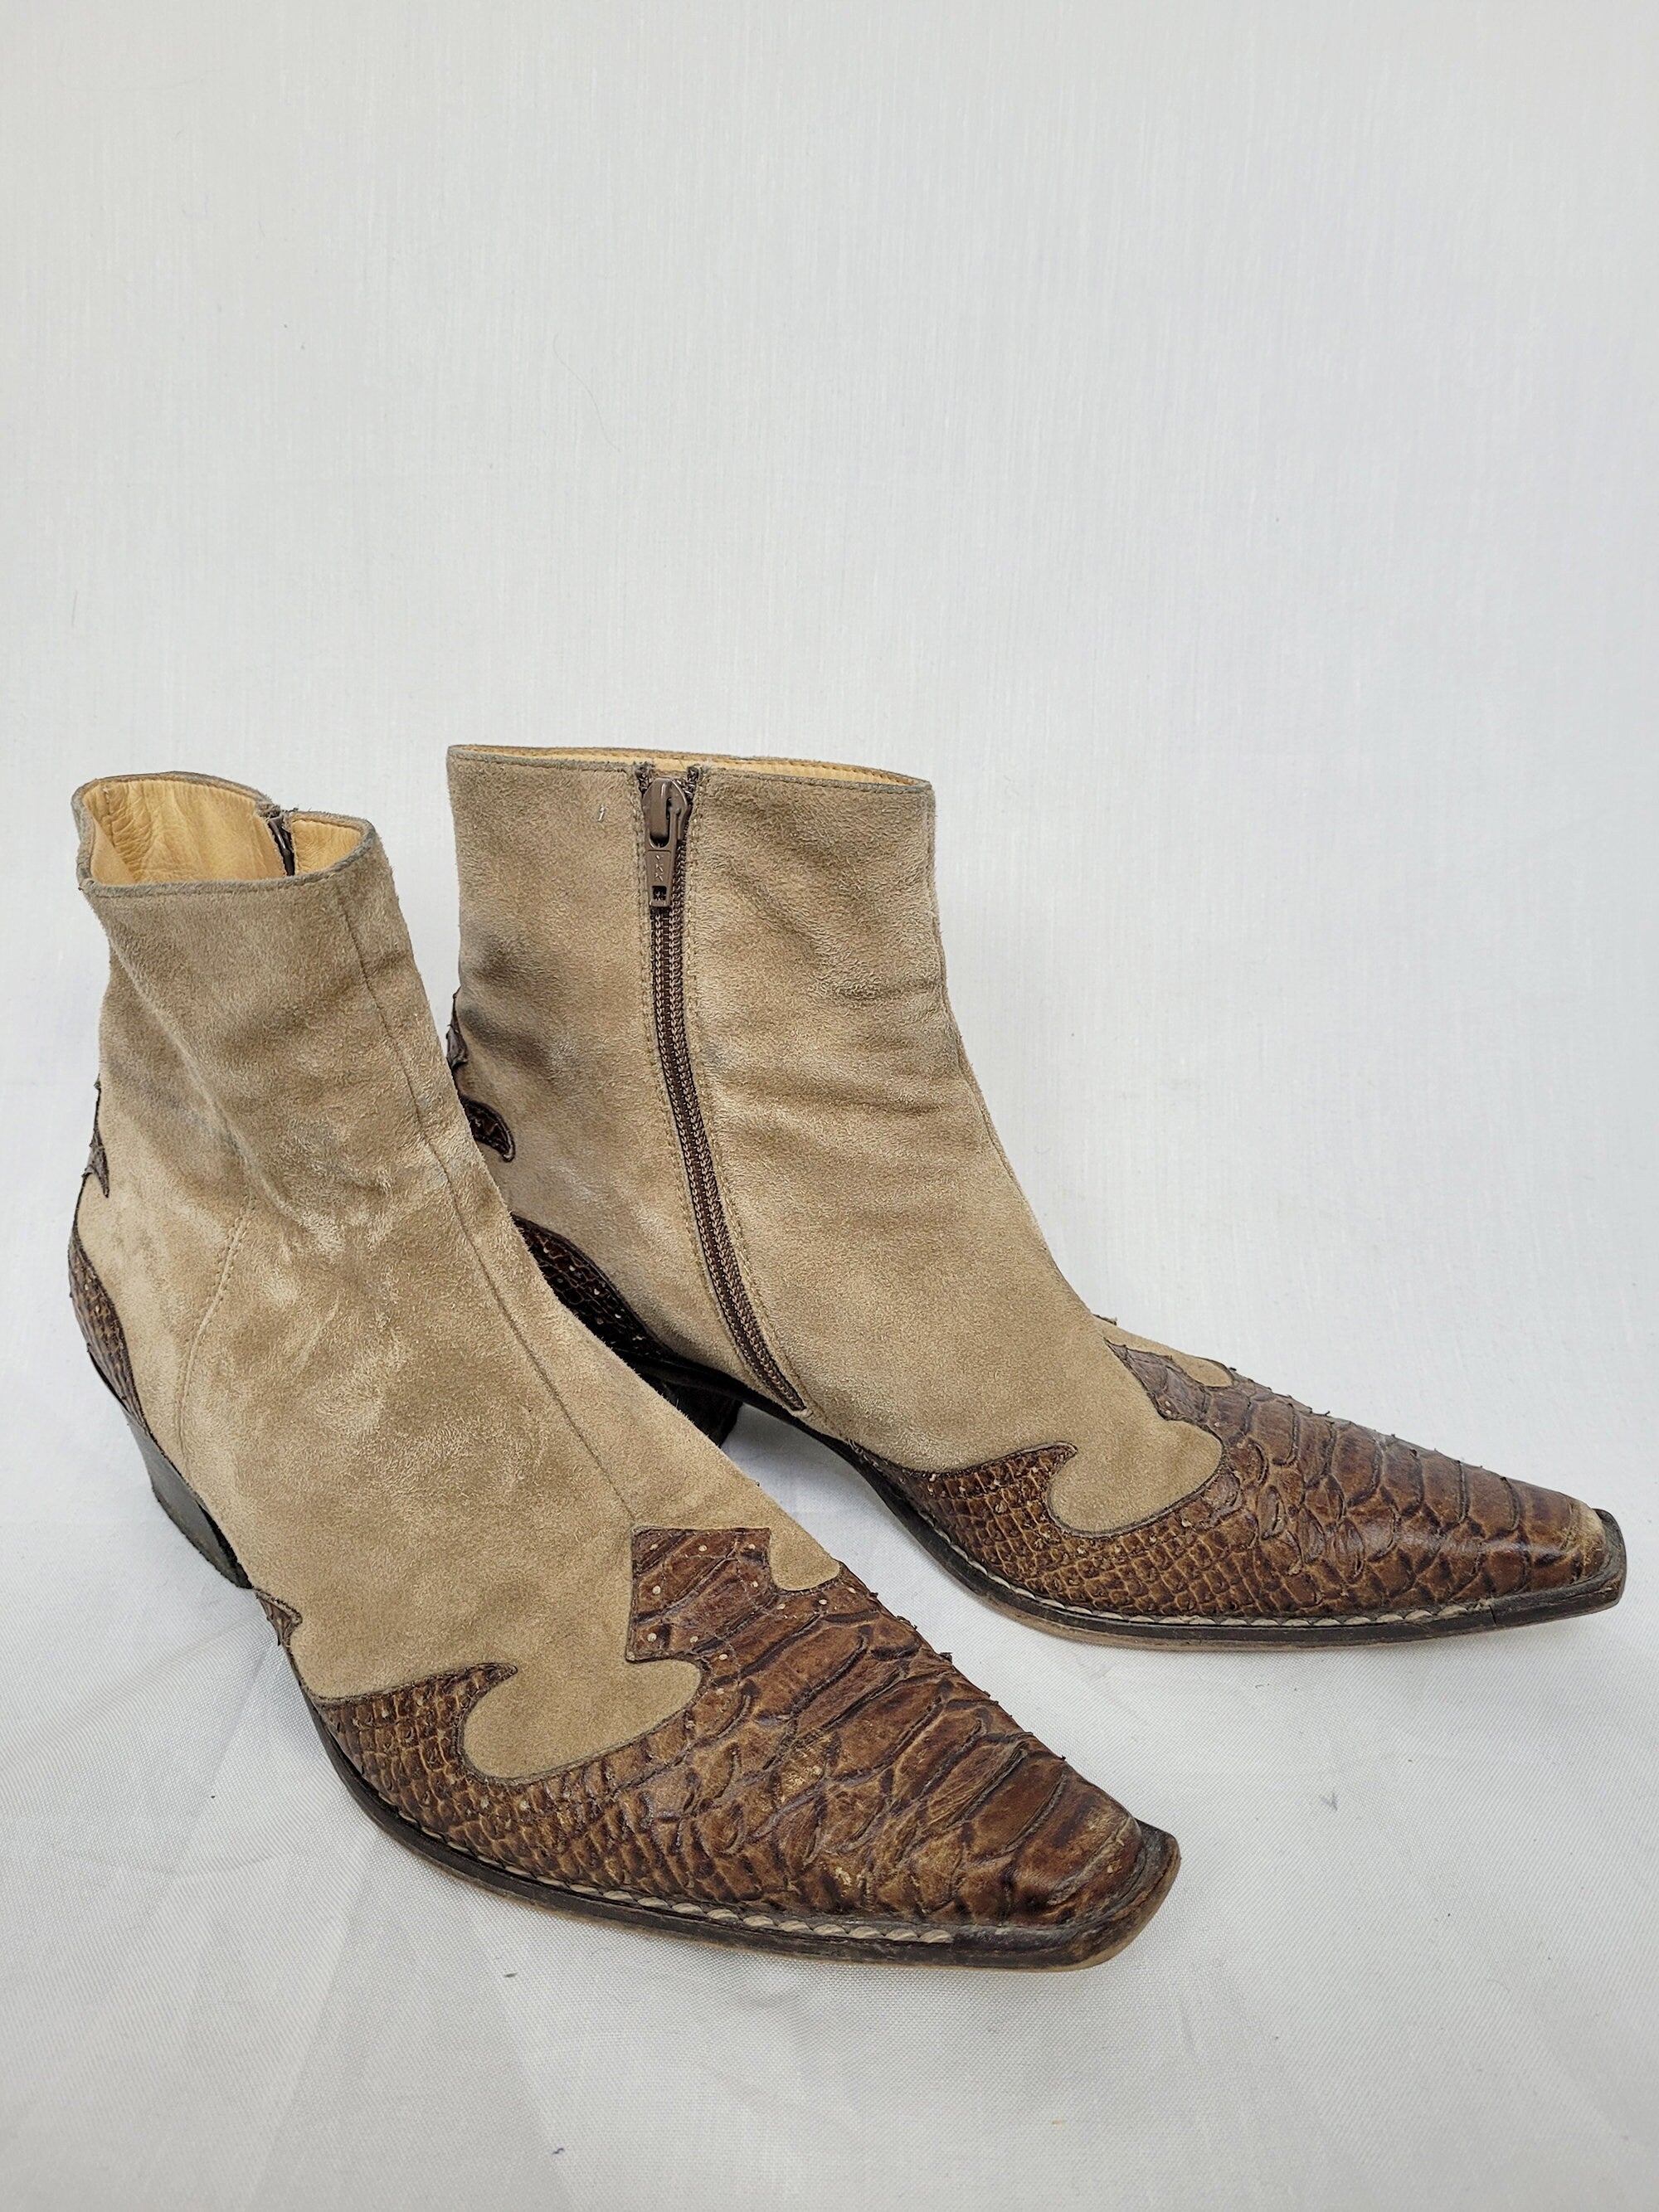 Vintage 90s brown suede Western Cowboy ankle shoes